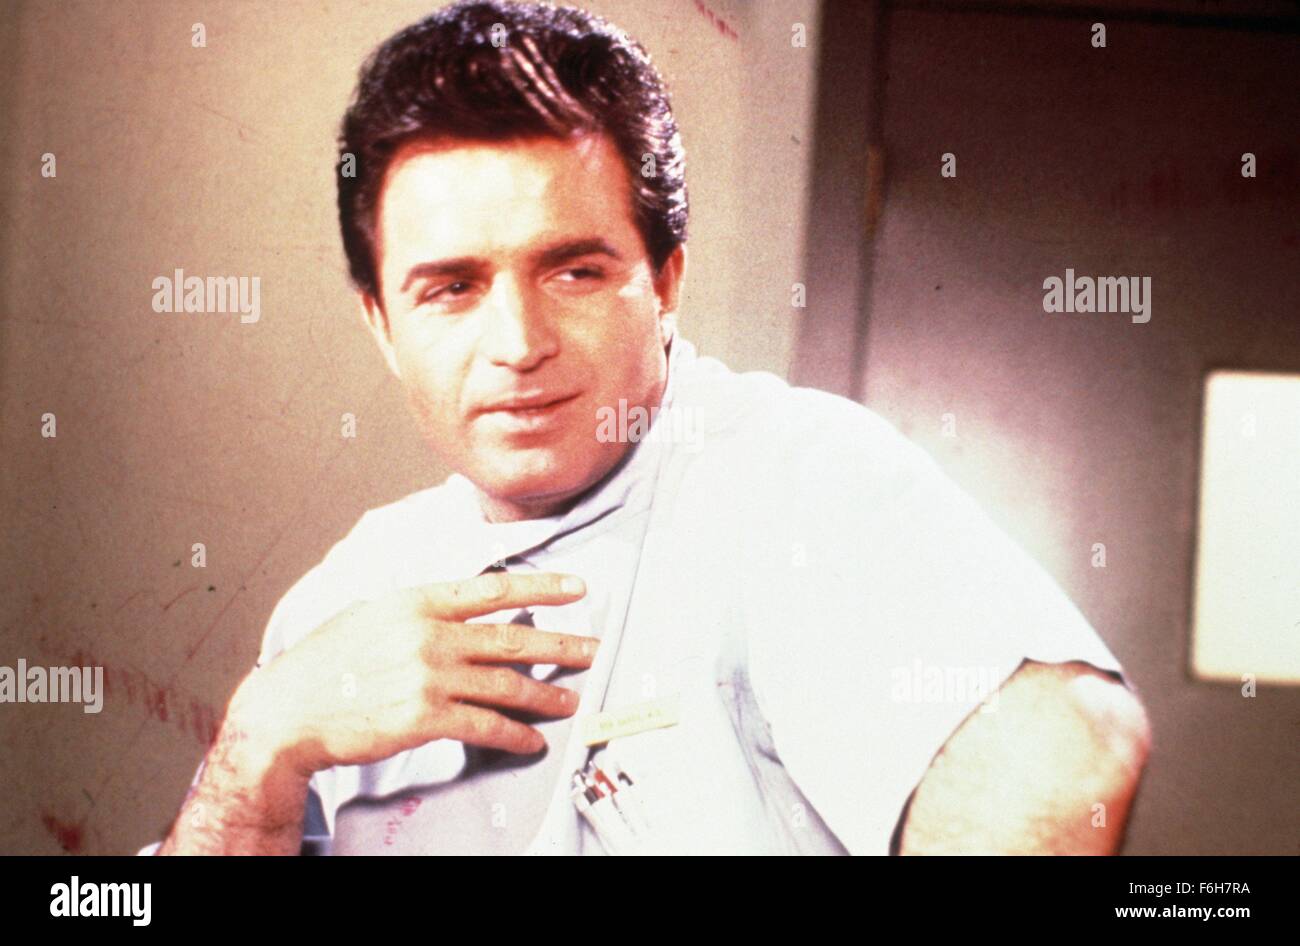 1962, Filmtitel: BEN CASEY, abgebildet: Kleidung, Herr Doktor. (Bild Kredit: SNAP) Stockfoto